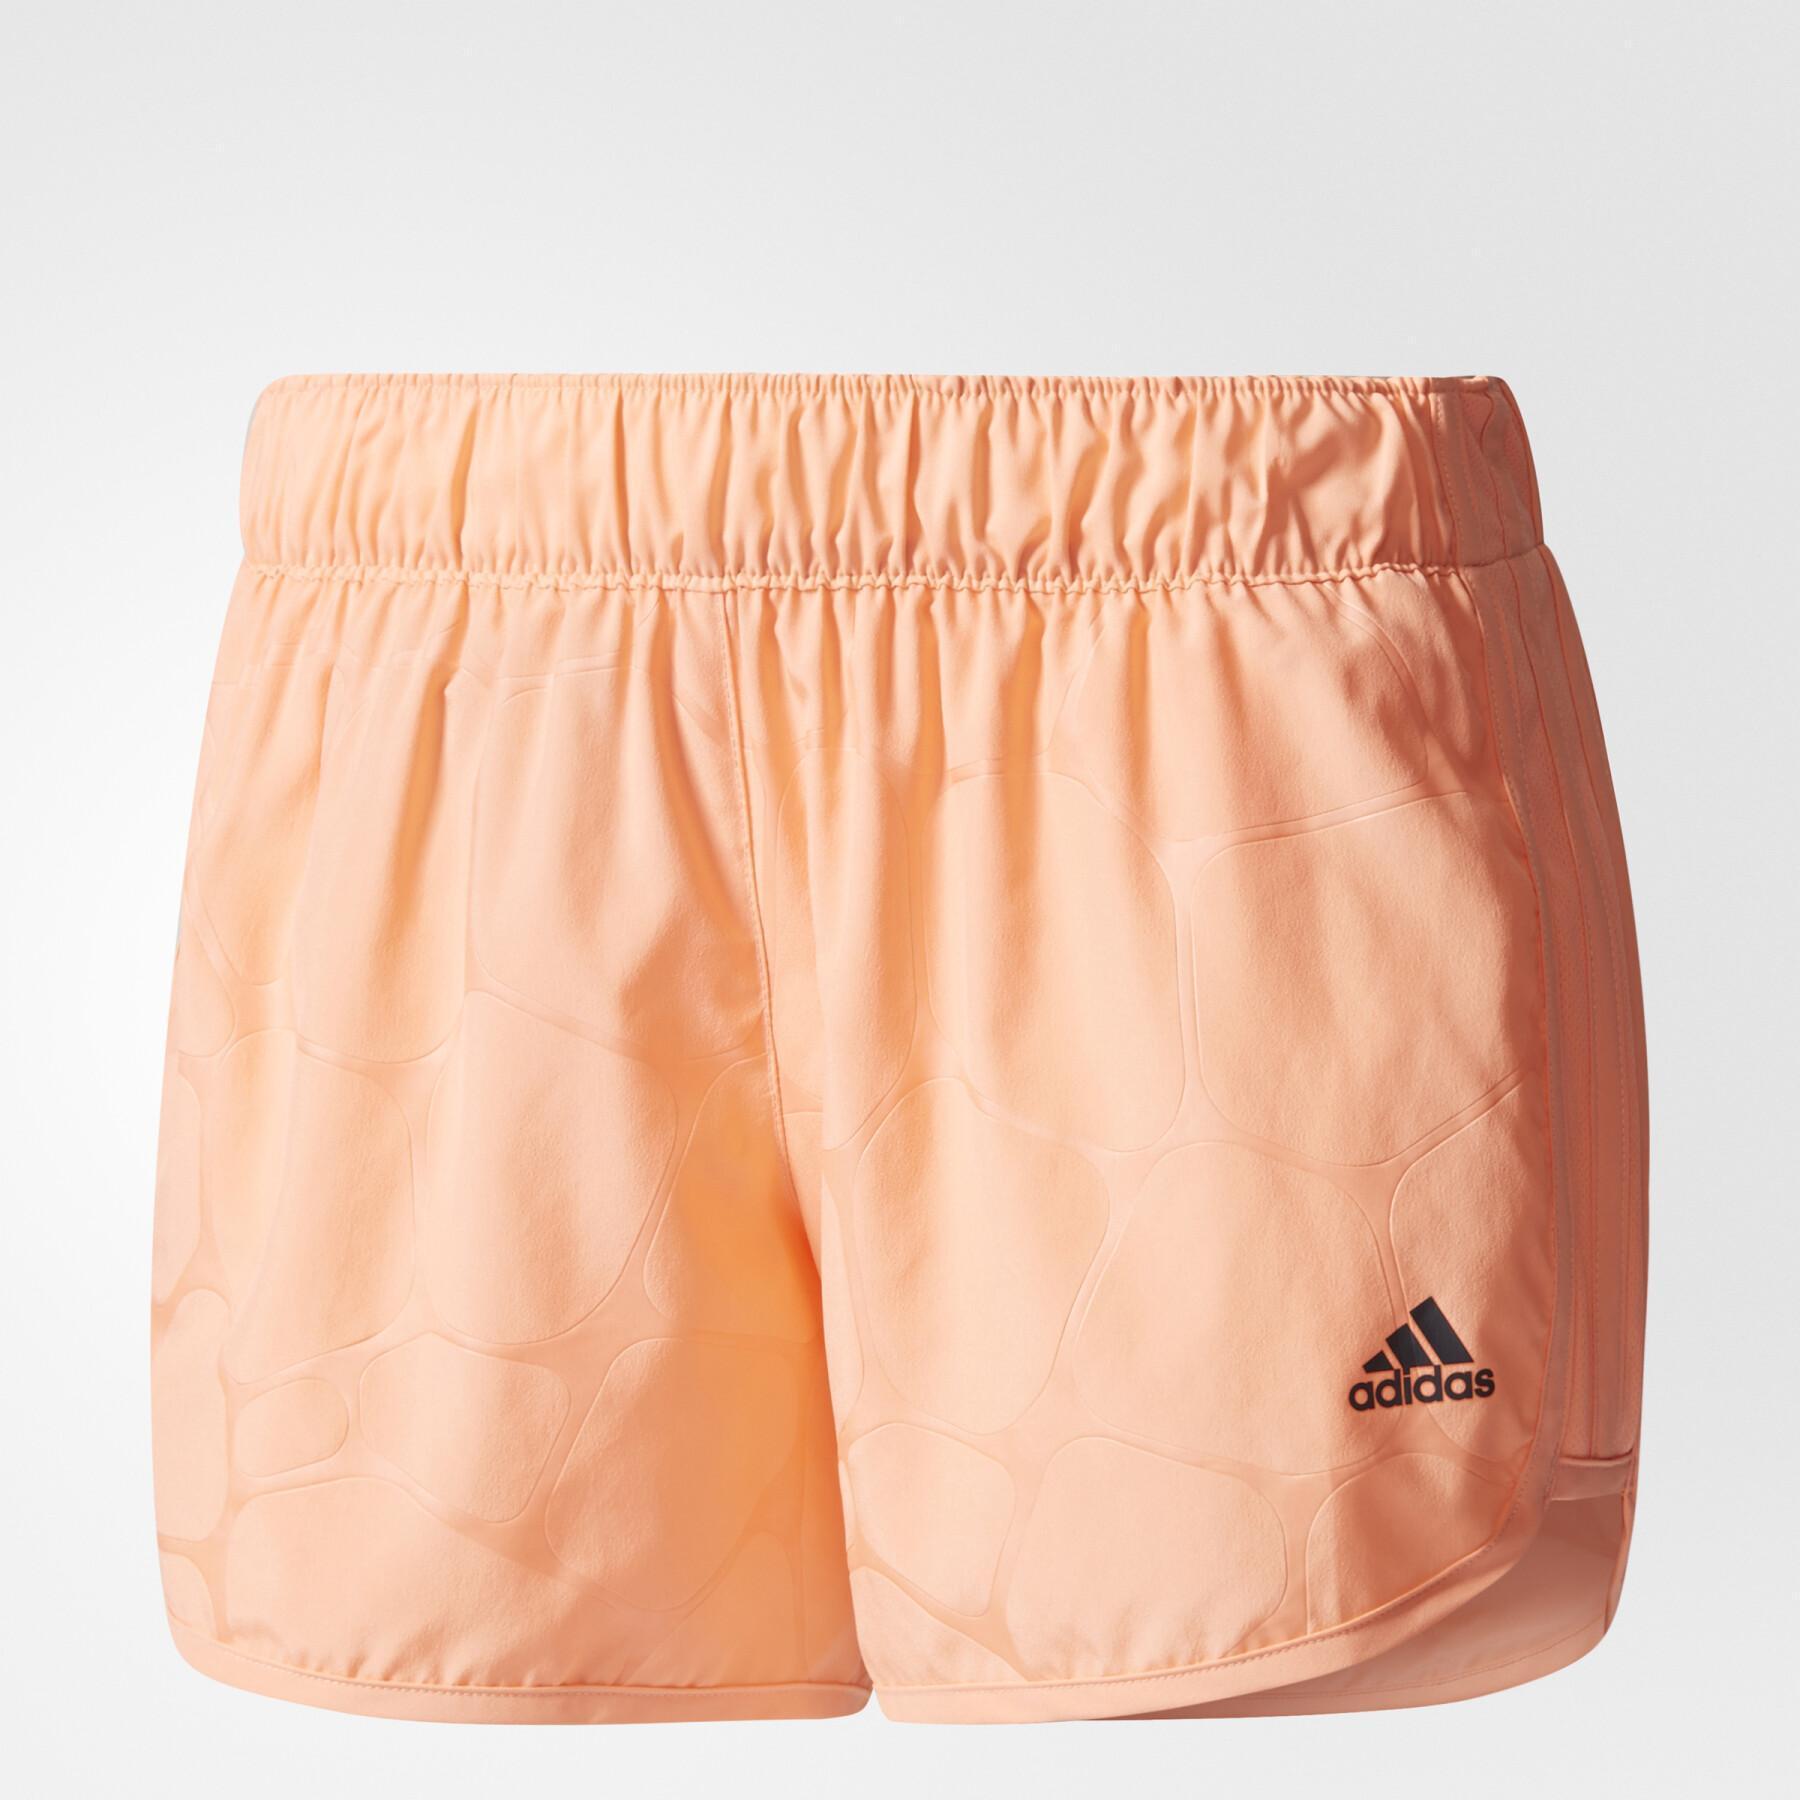 Women's shorts adidas M10 Energized Boost